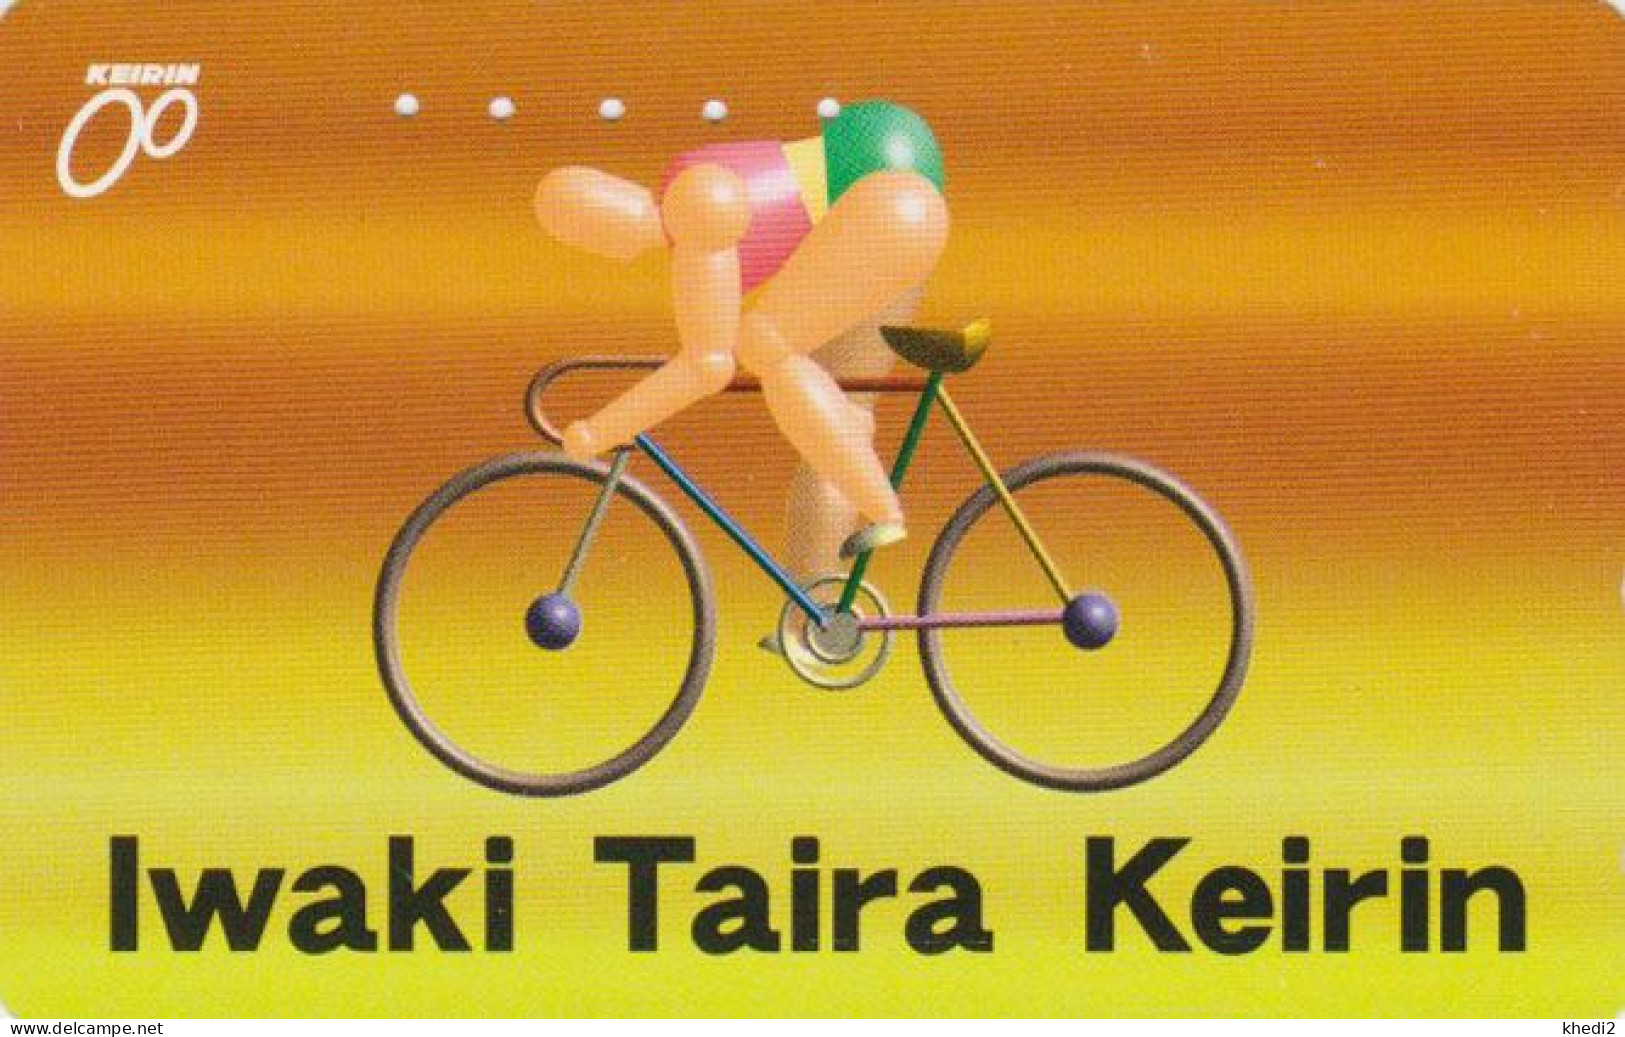 TC JAPON / 110-011  - SPORT CYCLISME VELO -  IWAKI TAIRA KEIRIN - CYCLING BIKE JAPAN Phonecard - RADFAHREN - 127 - Deportes